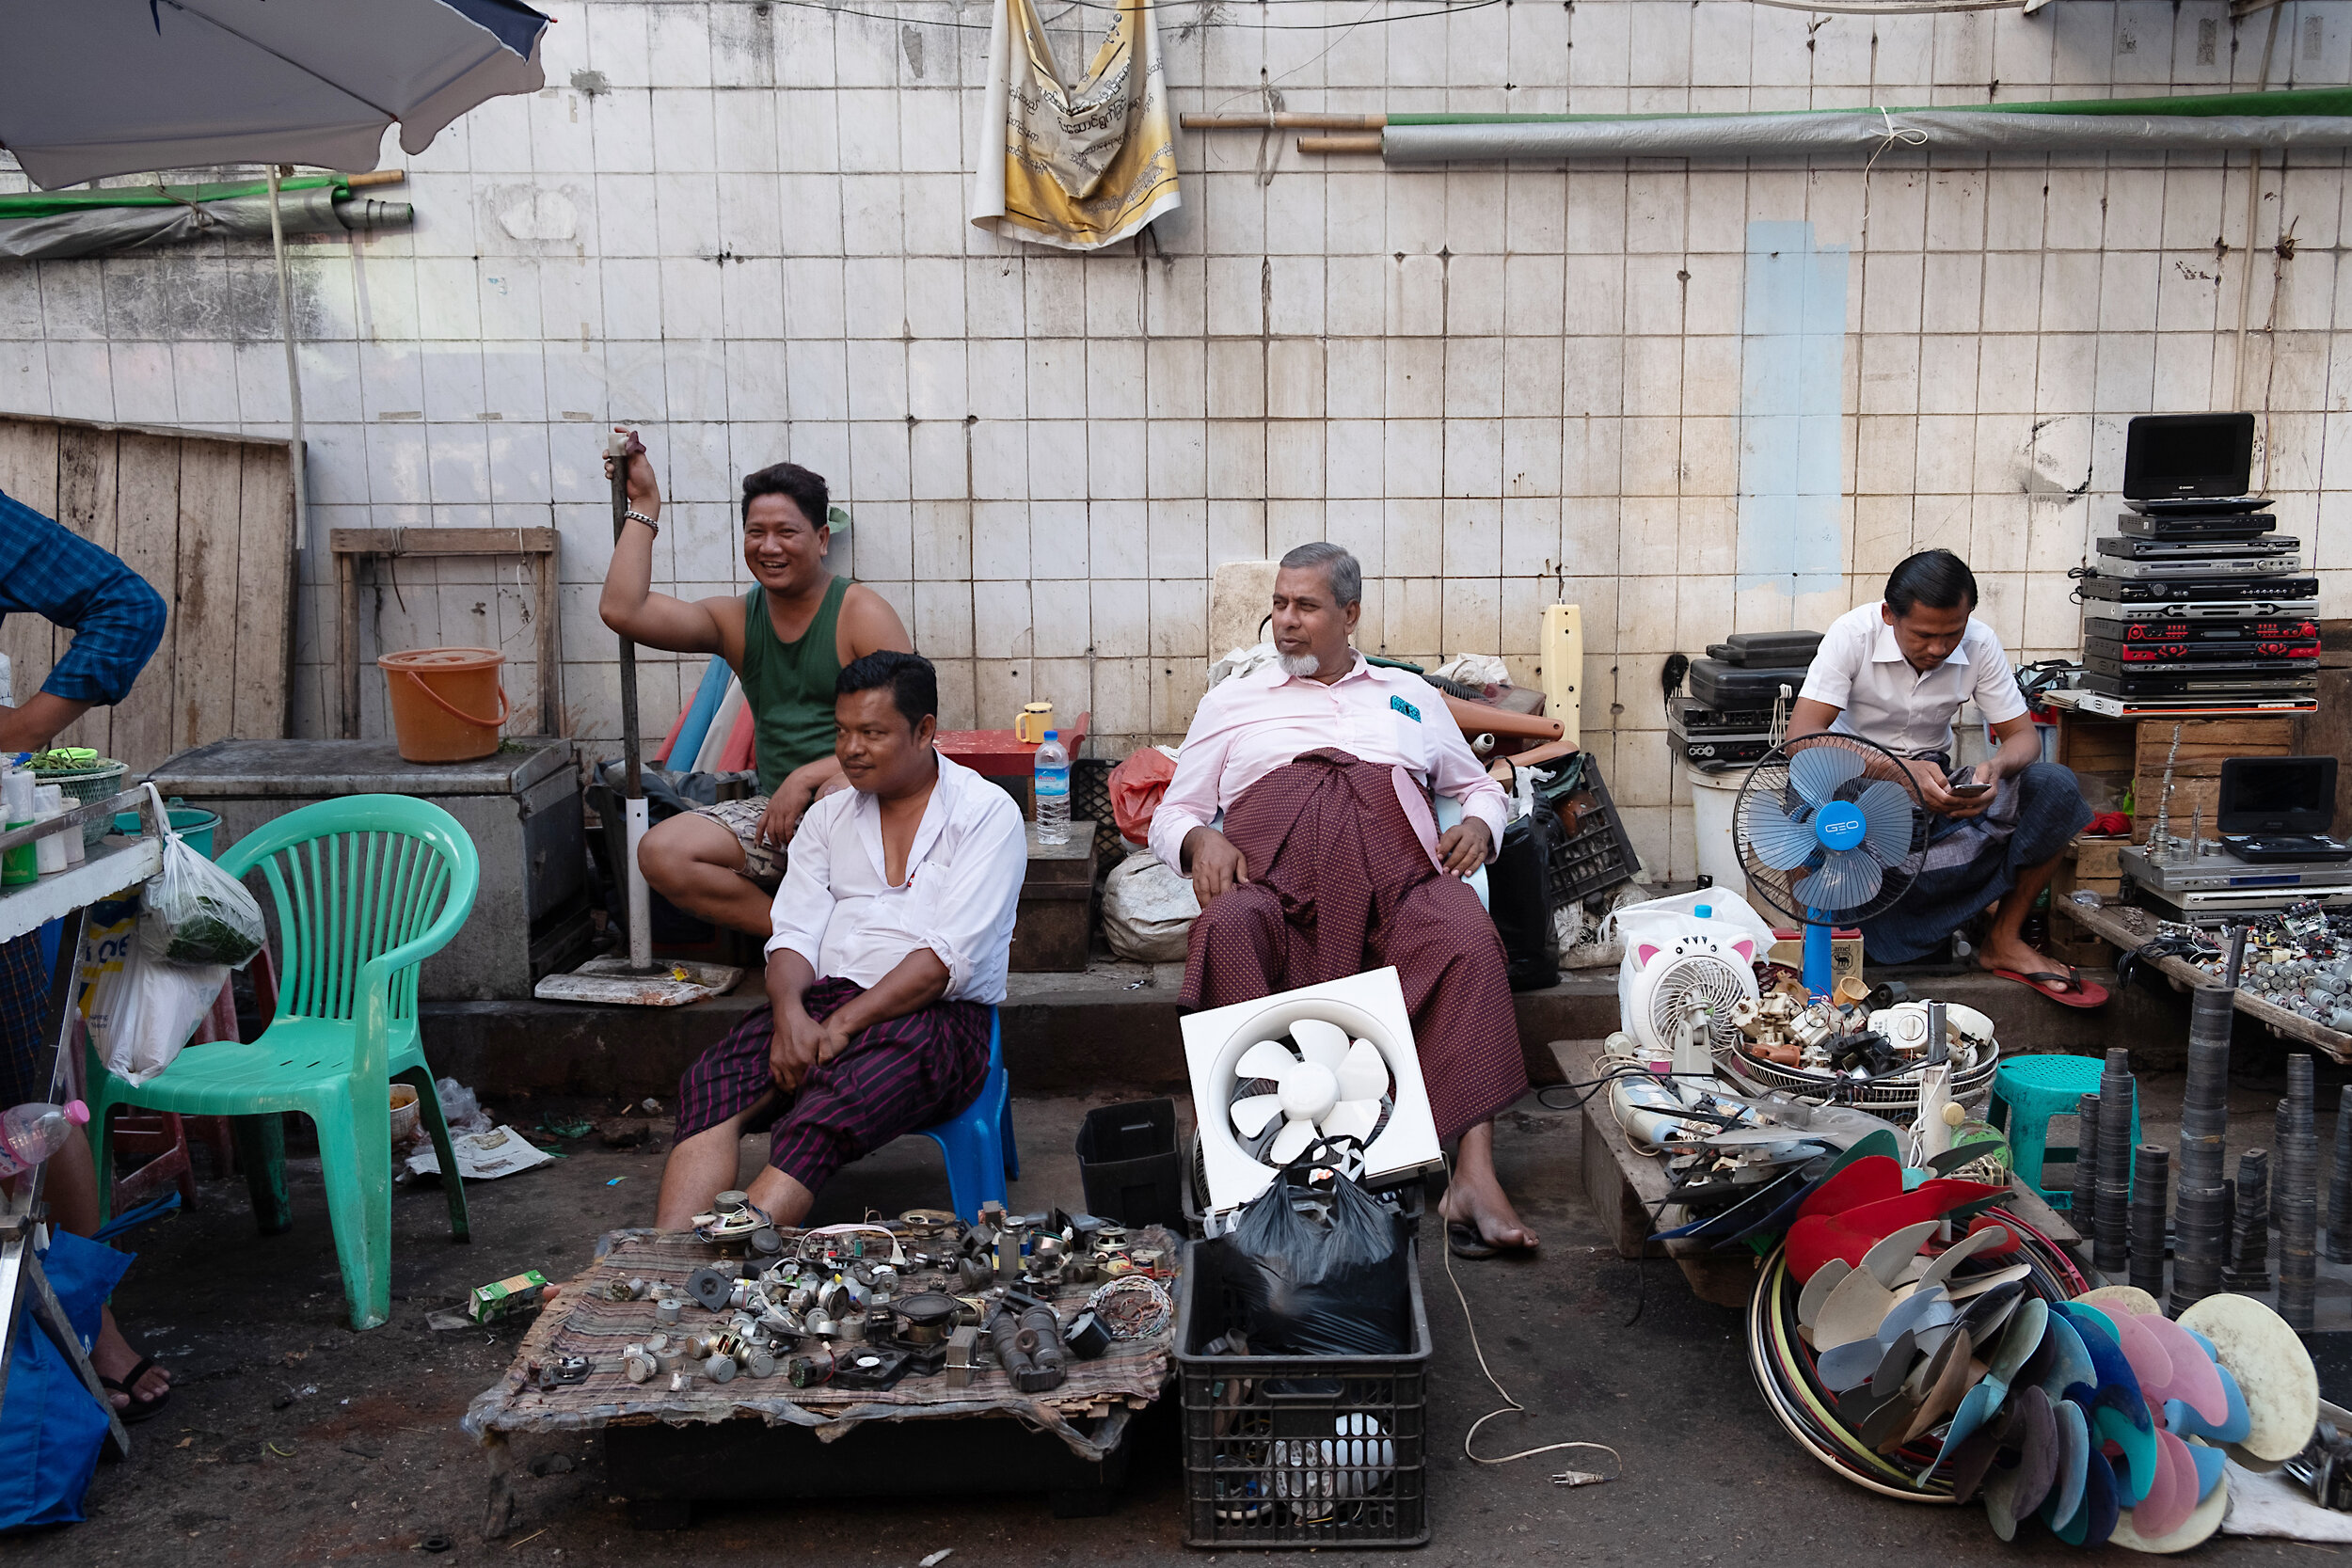  Junk sellers, downtown Yangon 